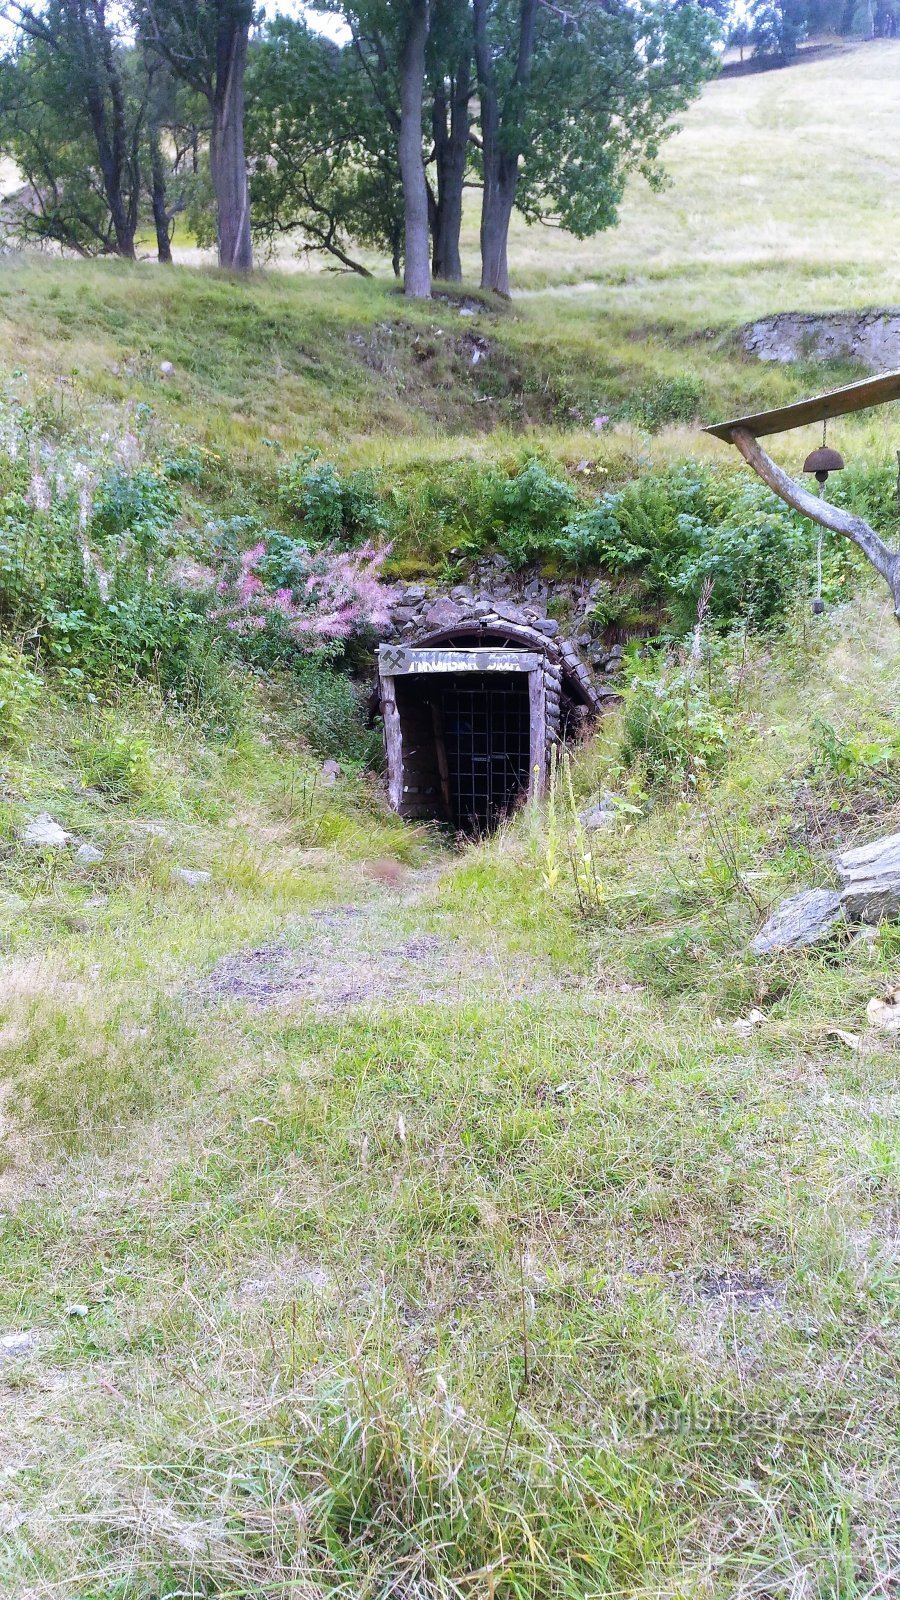 Nicholas tunnel